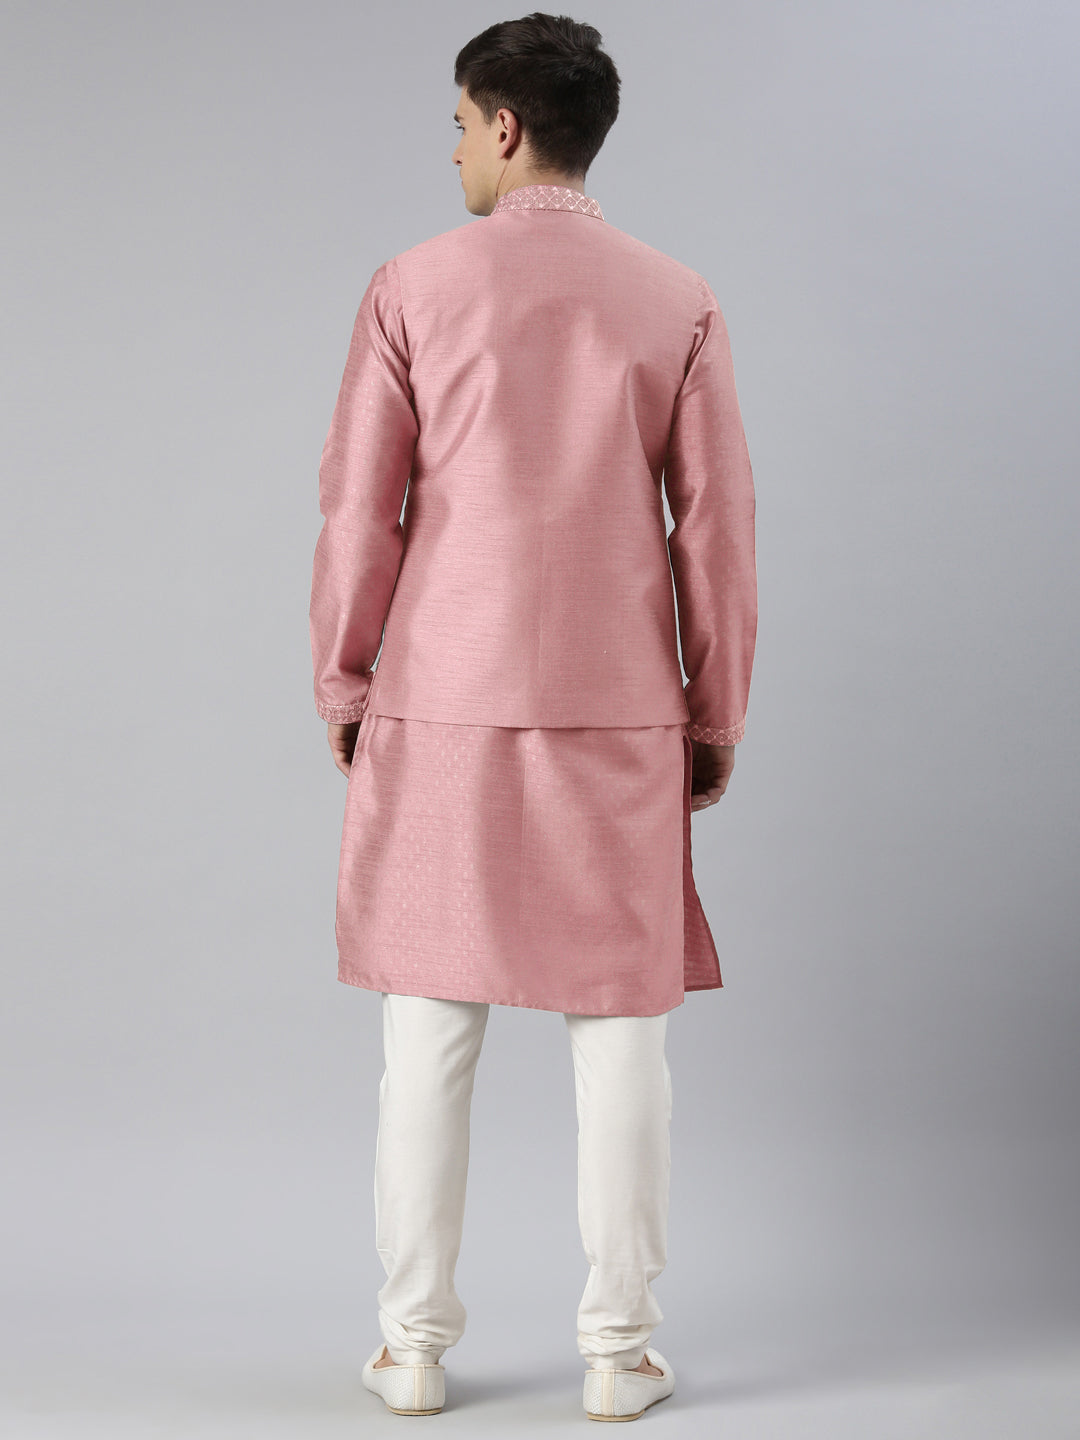 Pink Embroidered Jacket Kurta Set